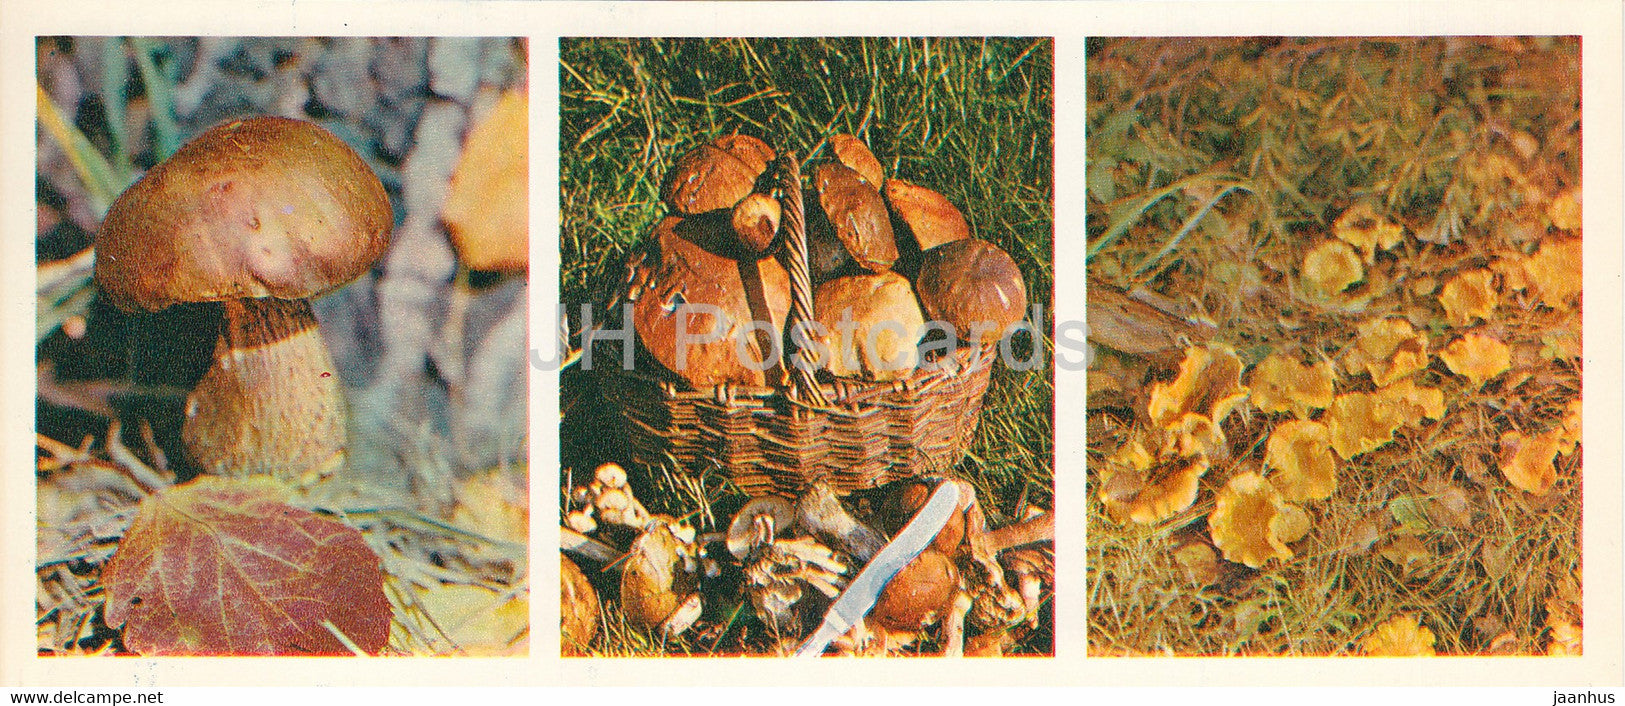 mushrooms - Leccinum - chanterelle - Forest Wealth - 1981 - Russia USSR - unused - JH Postcards